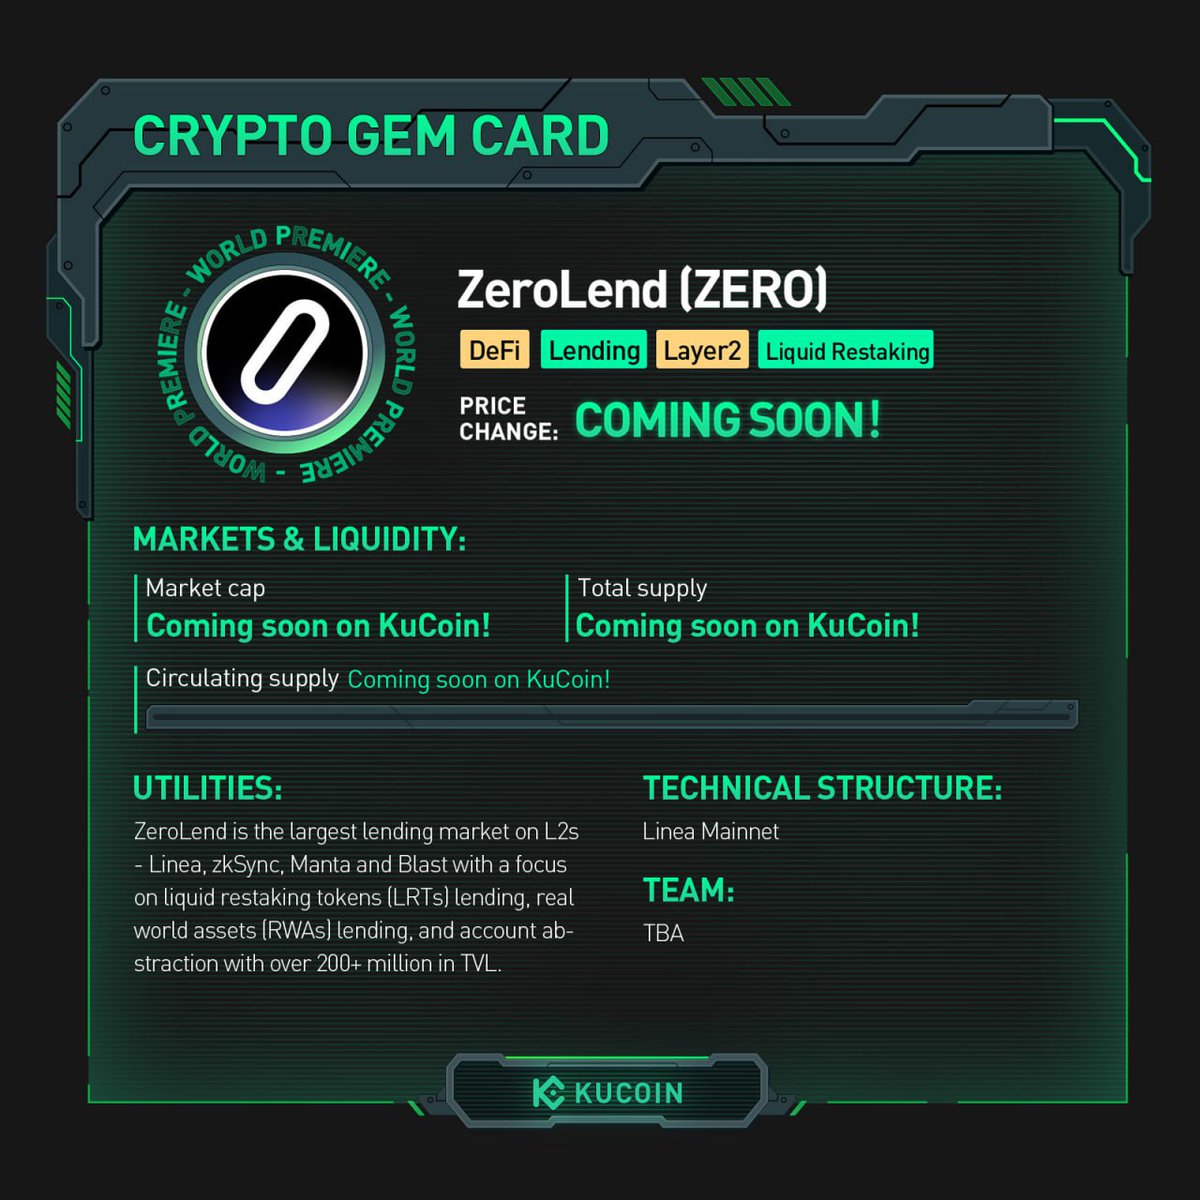 $ZERO trading is now live on #KuCoin! 🚀ZERO/USDT: trade.kucoin.com/ZERO-USDT?utm_… Find out more about ZeroLend in #KuCoinCryptoGem card. #DeFi #Lending #Layer2 #LiquidRestaking